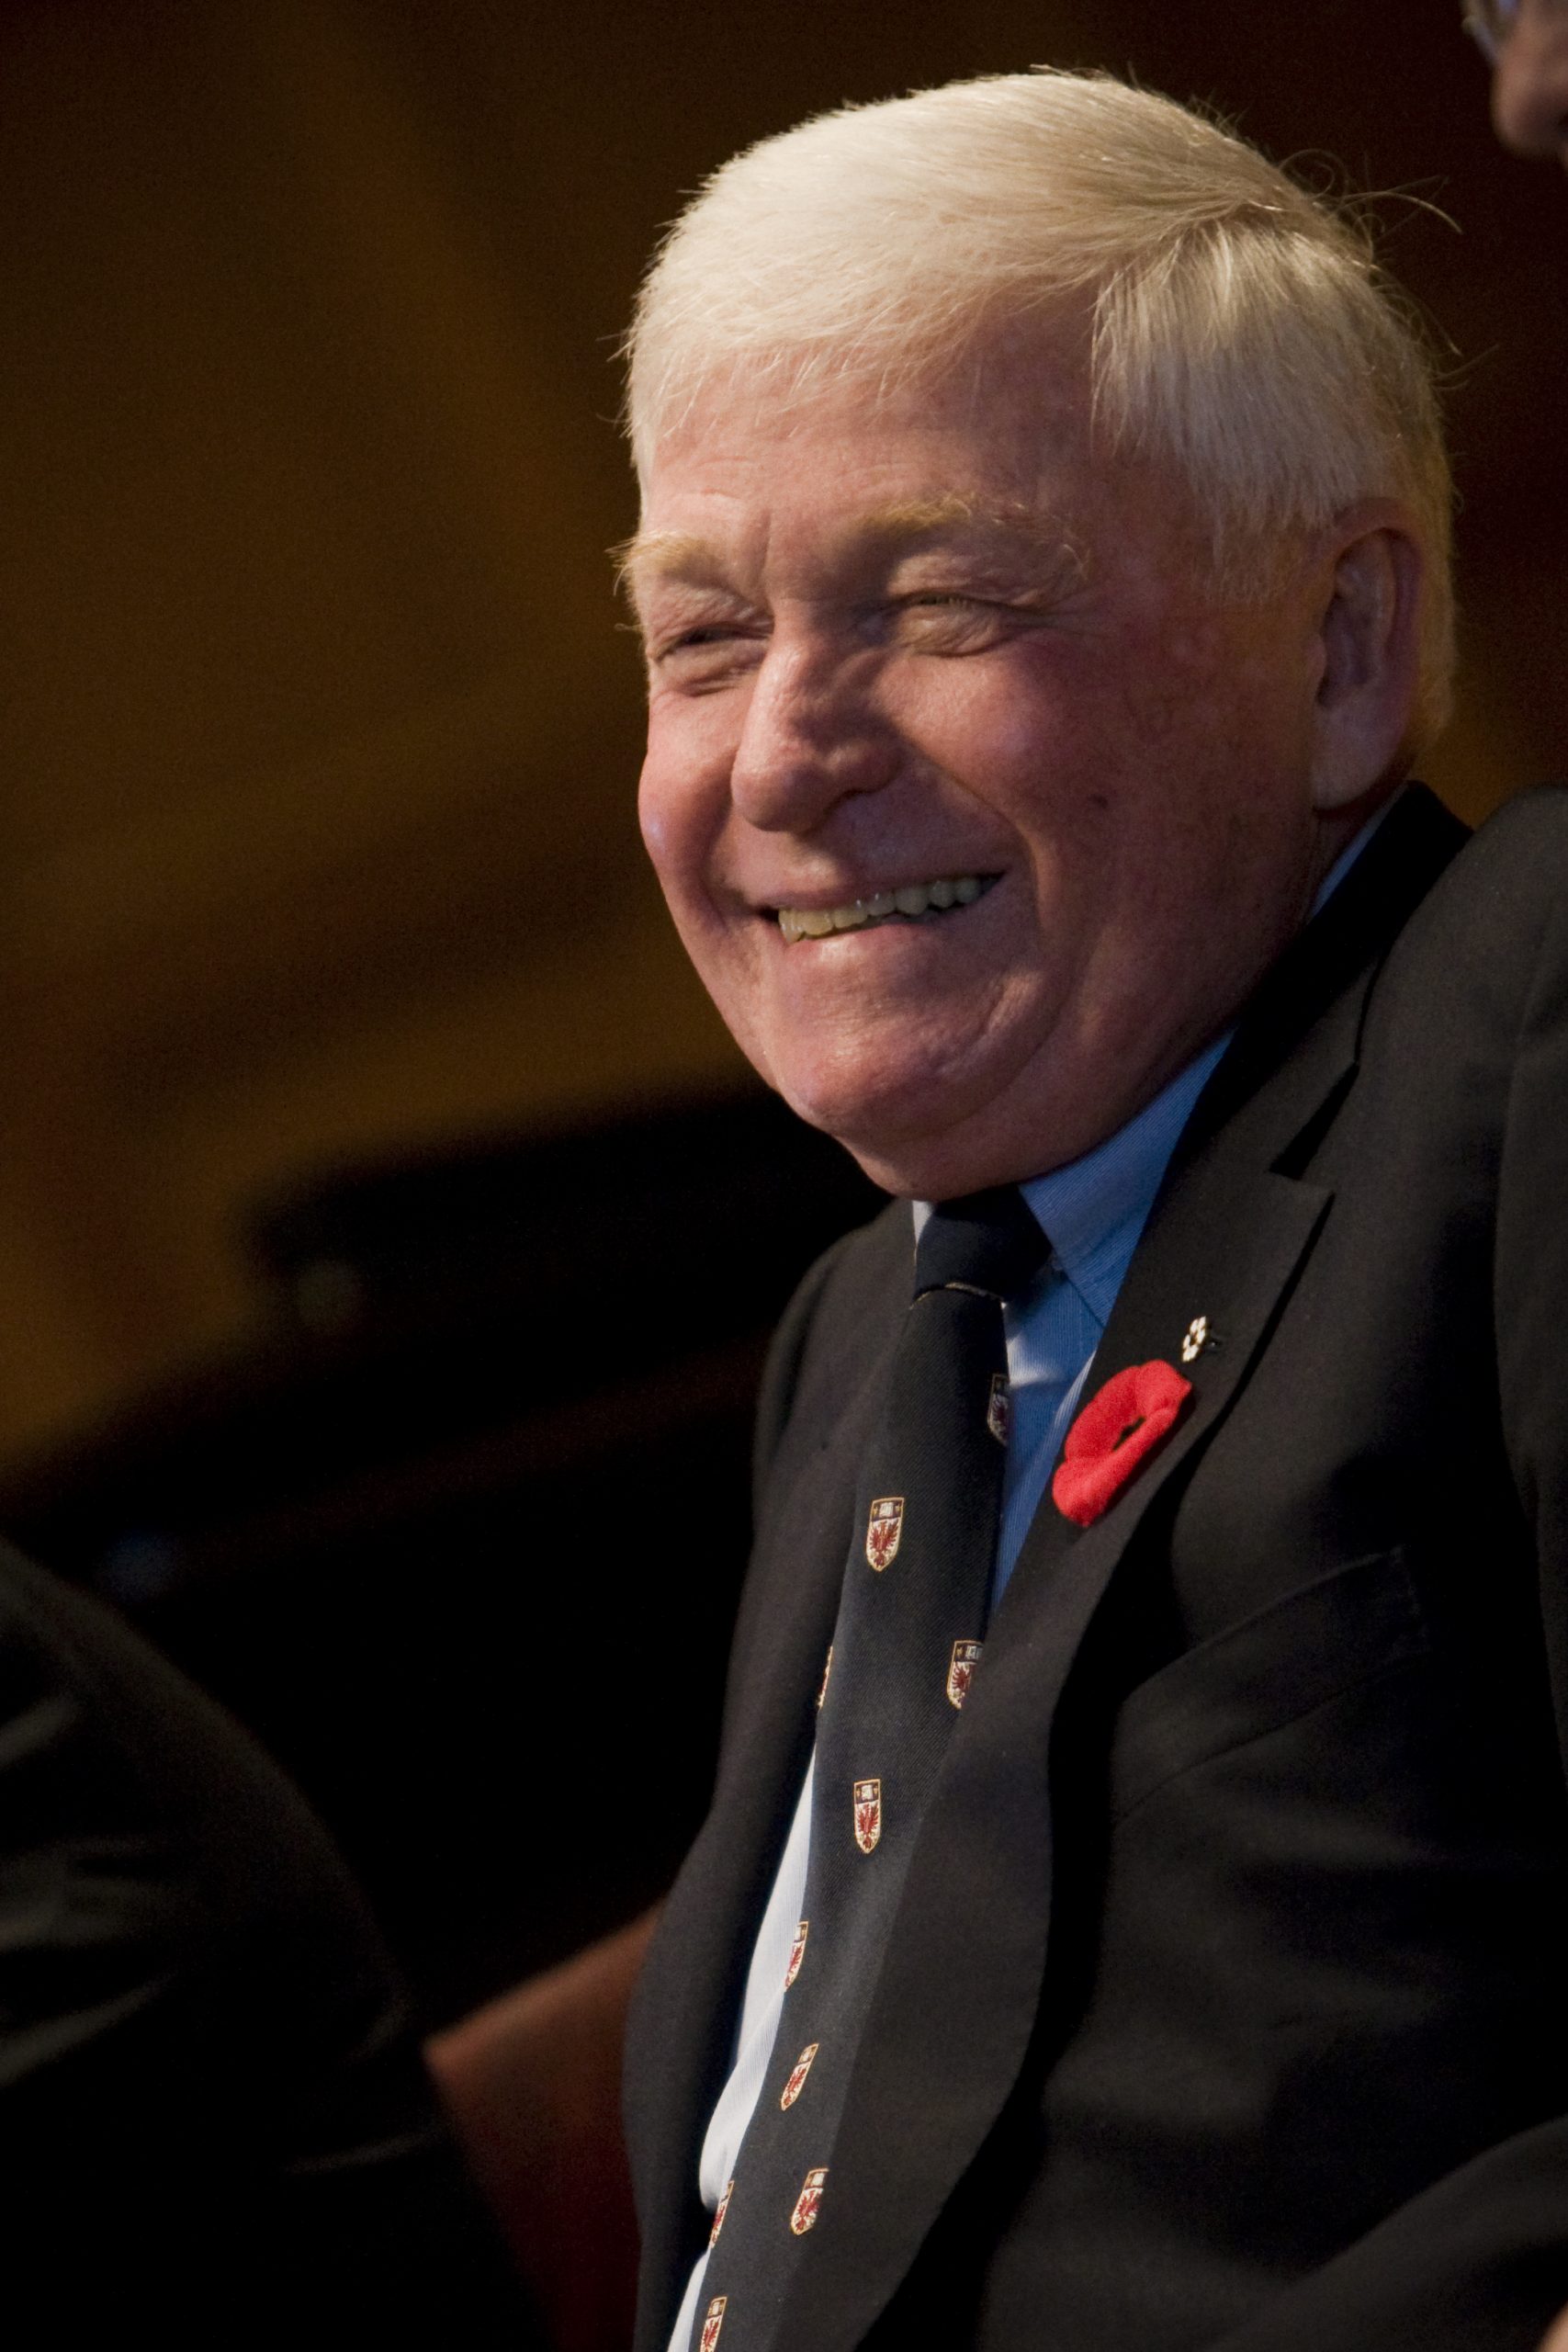 Chancellor Emeritus L.R. "Red" Wilson